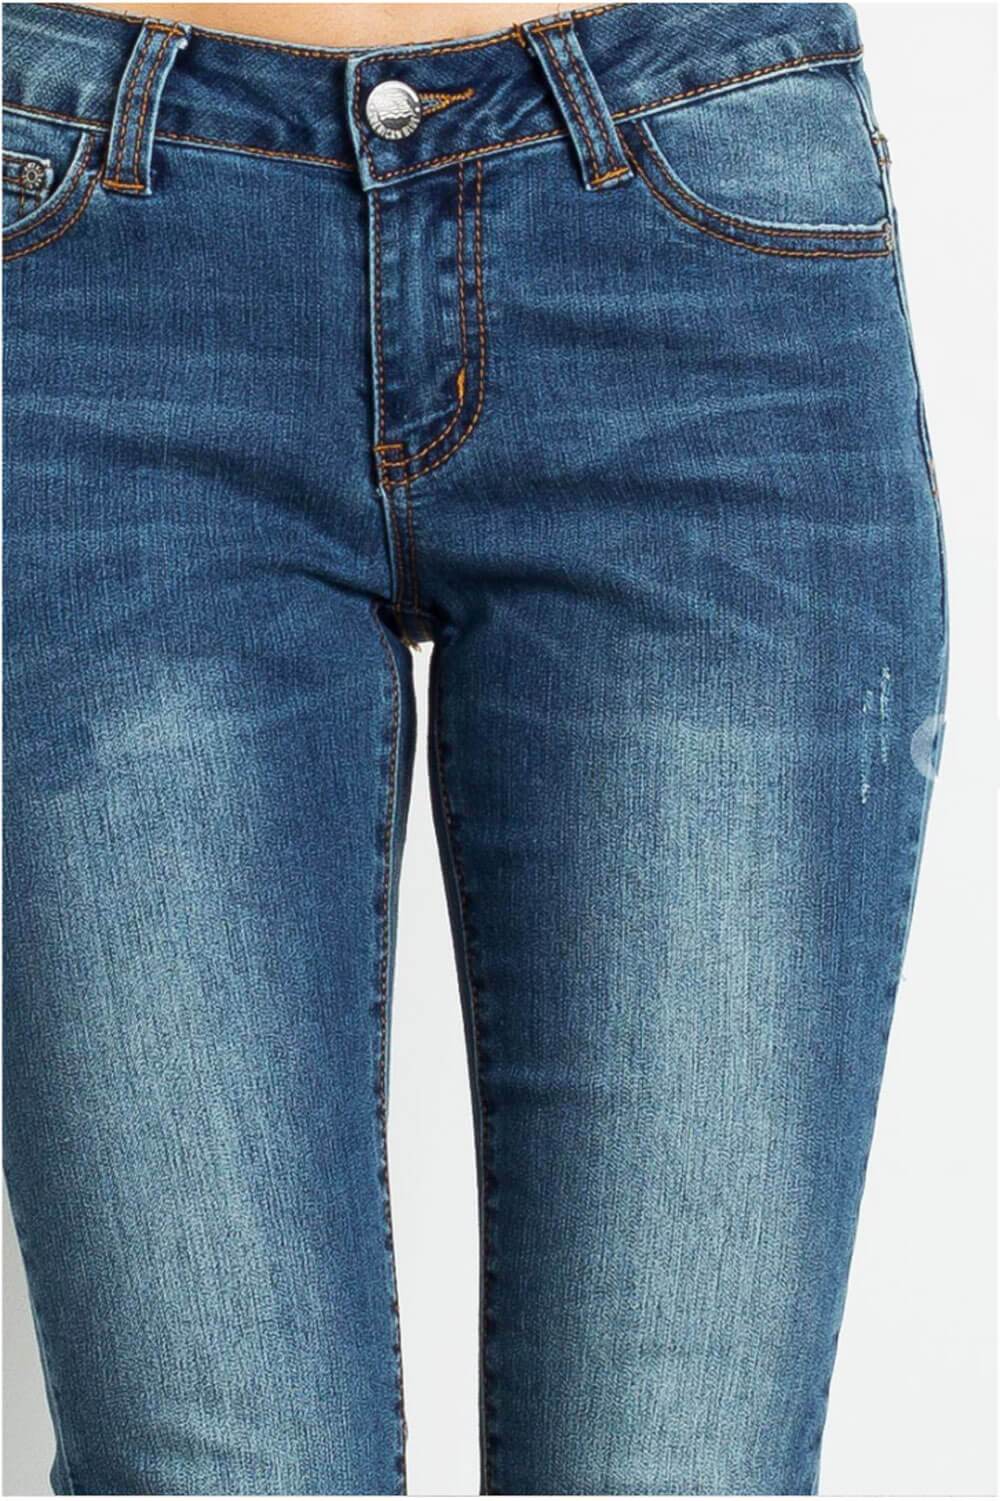 MM Denim Medium Wash Mid Rise Jeans blue detail MILK MONEY